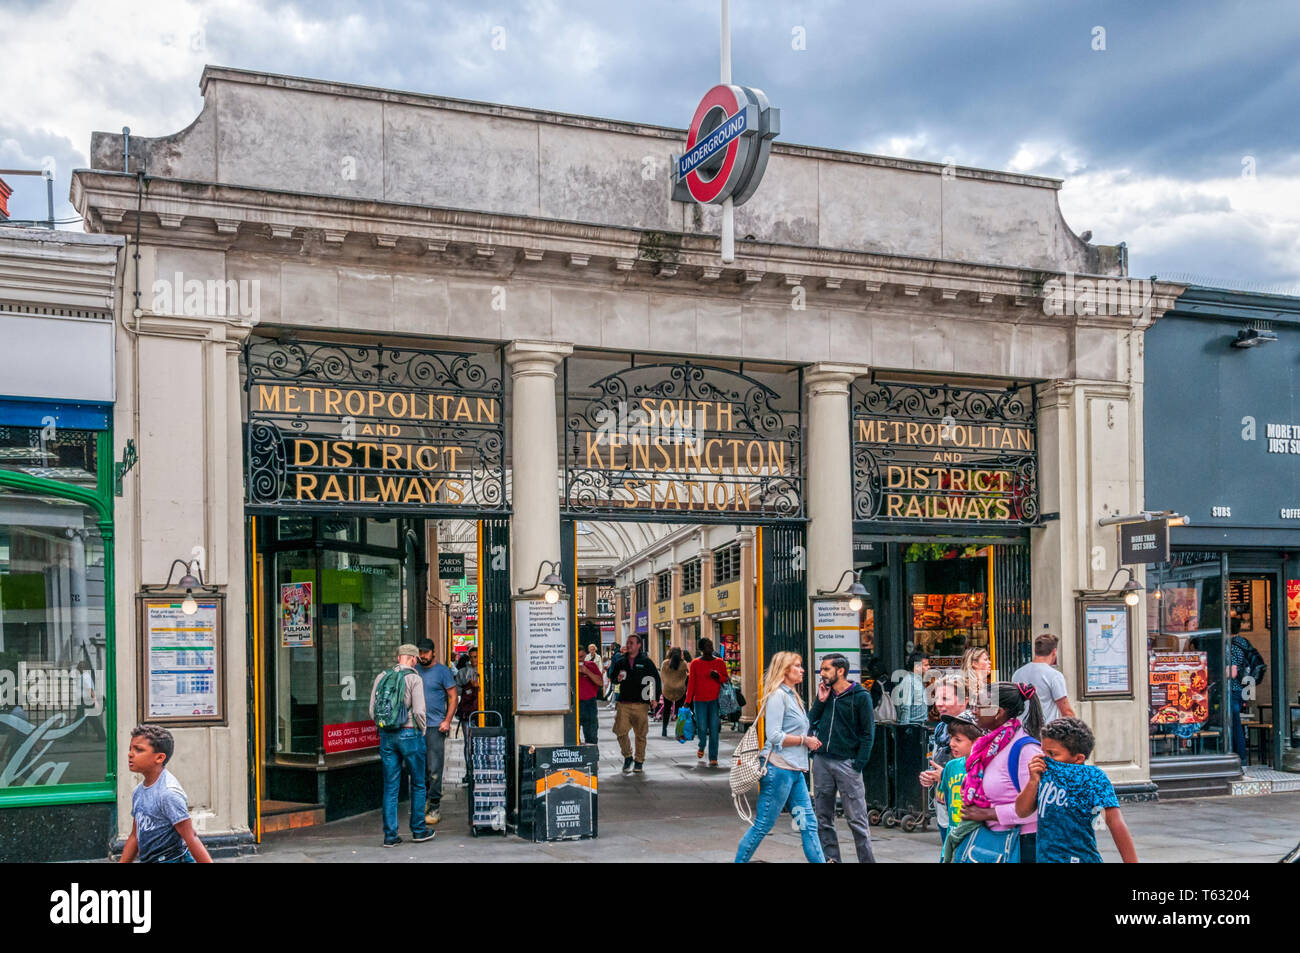 The Thurloe Street entrance to South Kensington tube station. Stock Photo